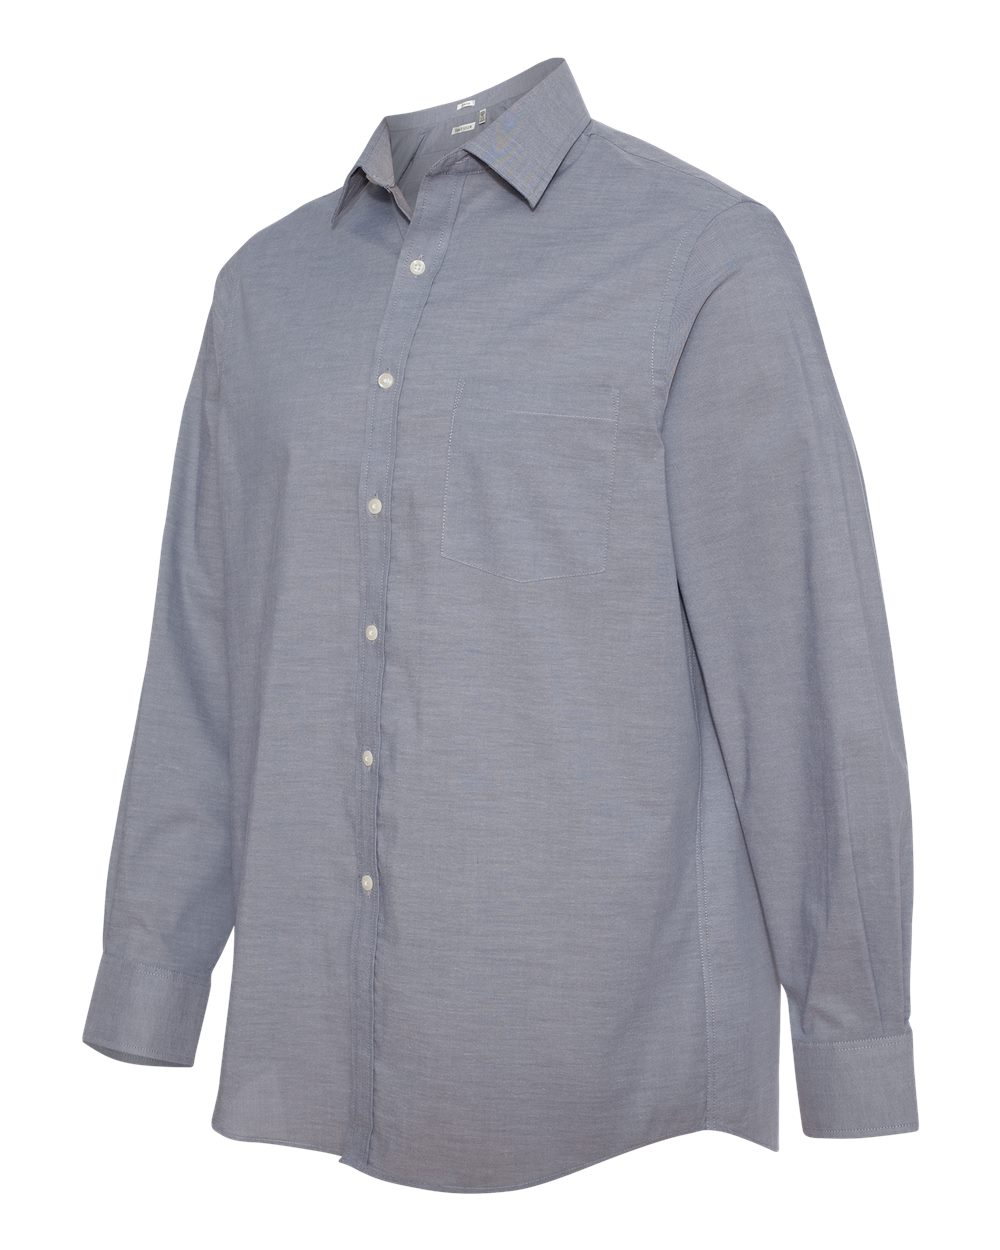 Van Heusen 13V0237 Stretch Pinpoint Spread Collar Shirt